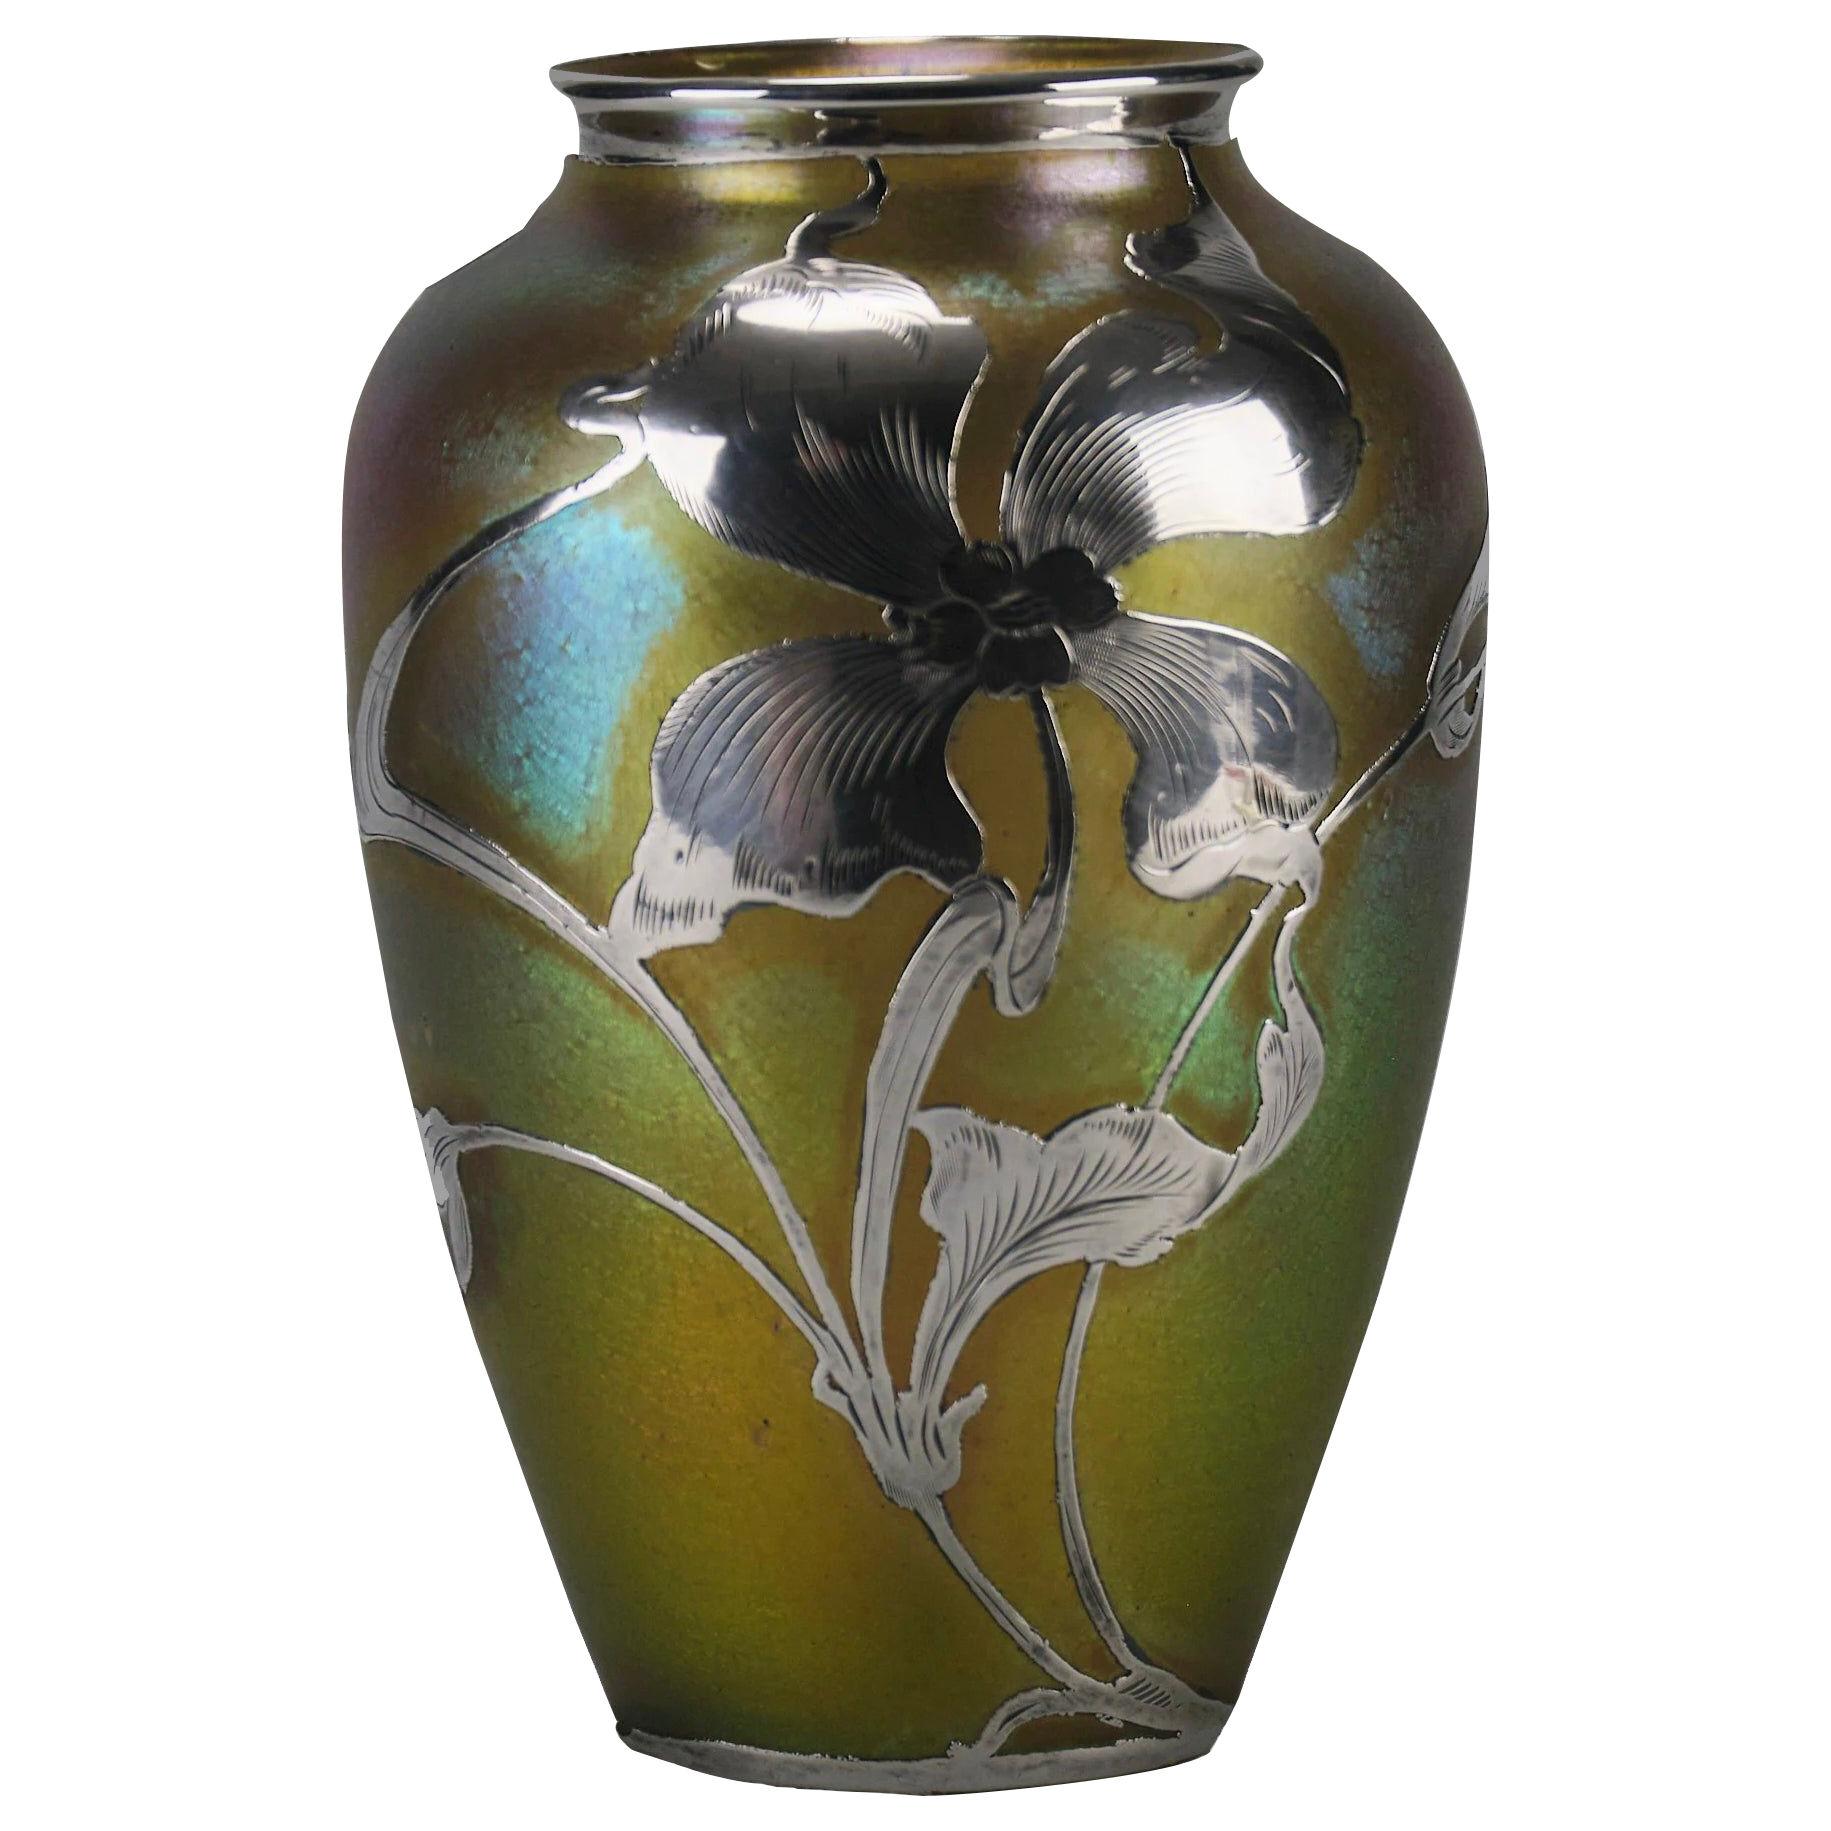 “Slberiris Candia Vase” Art Nouveau Glass Vase from the Loetz Glassworks